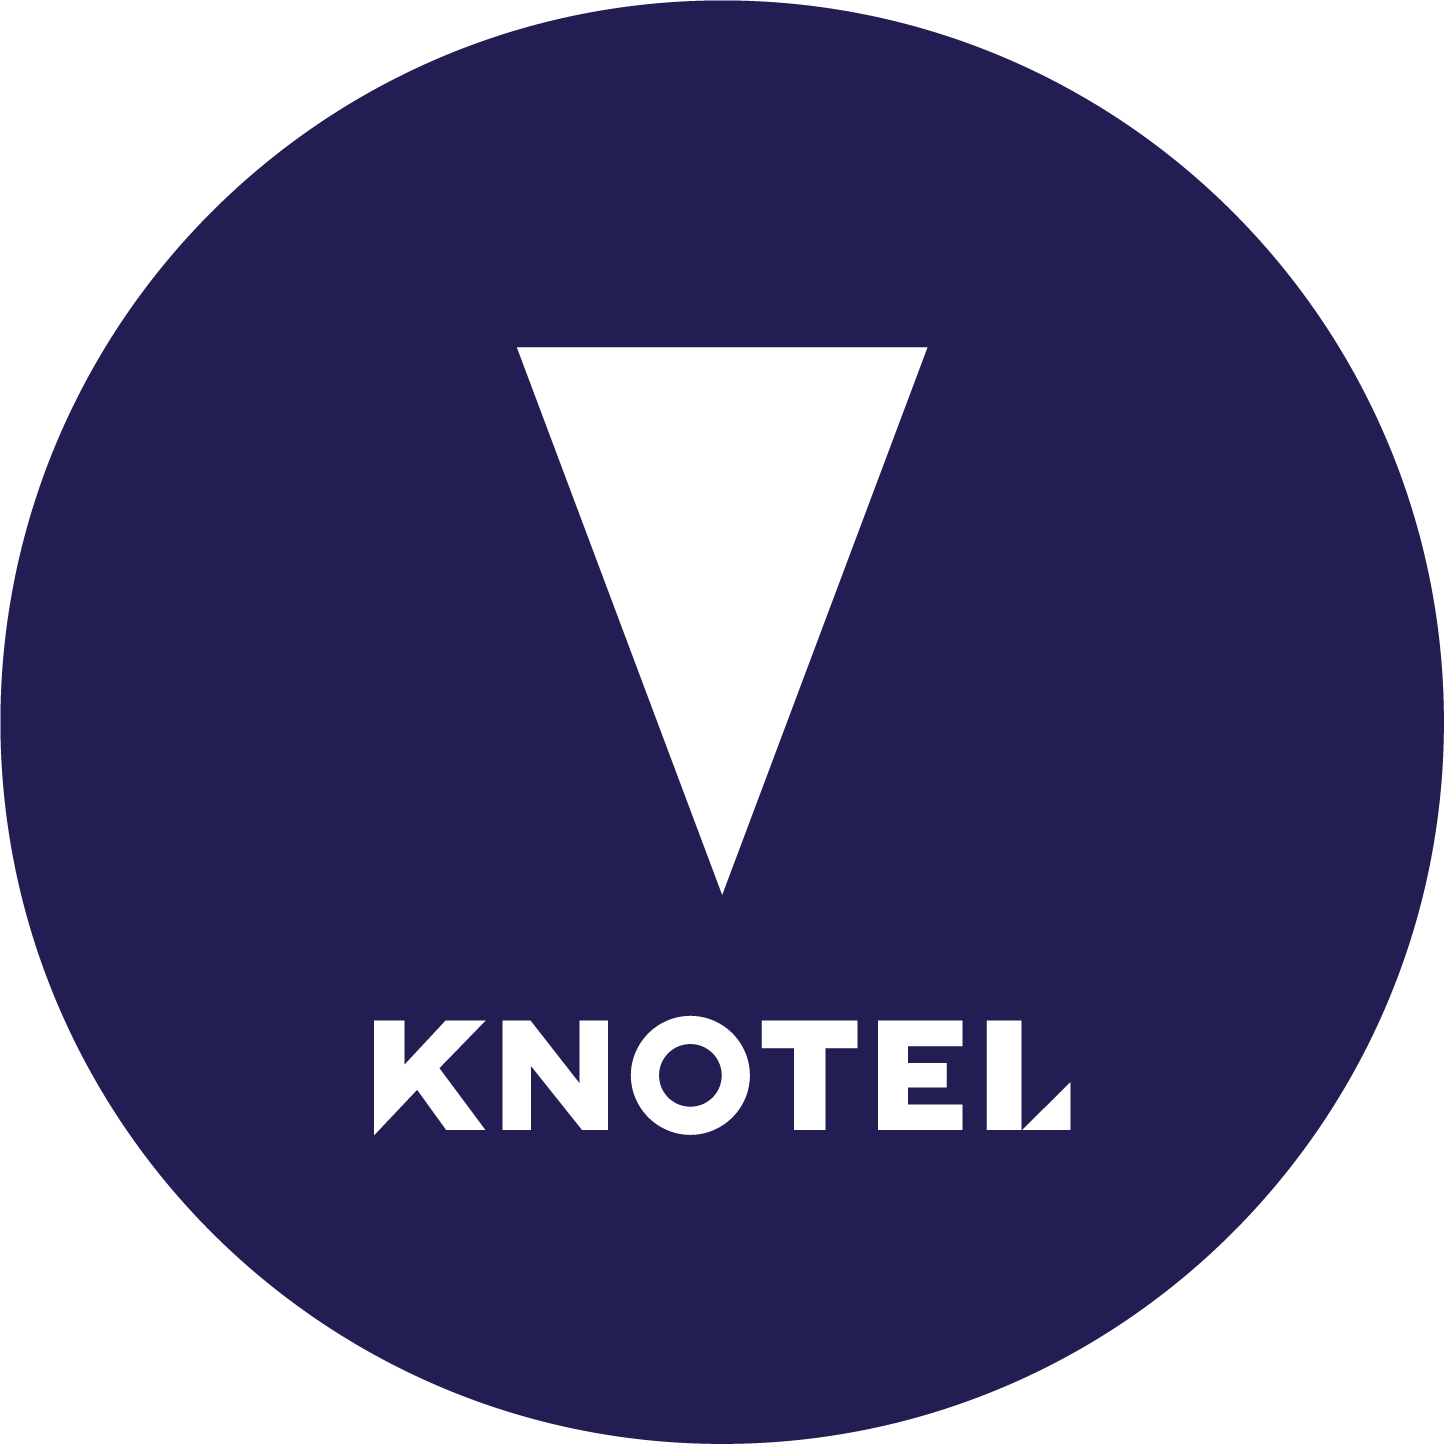 Knotel logo